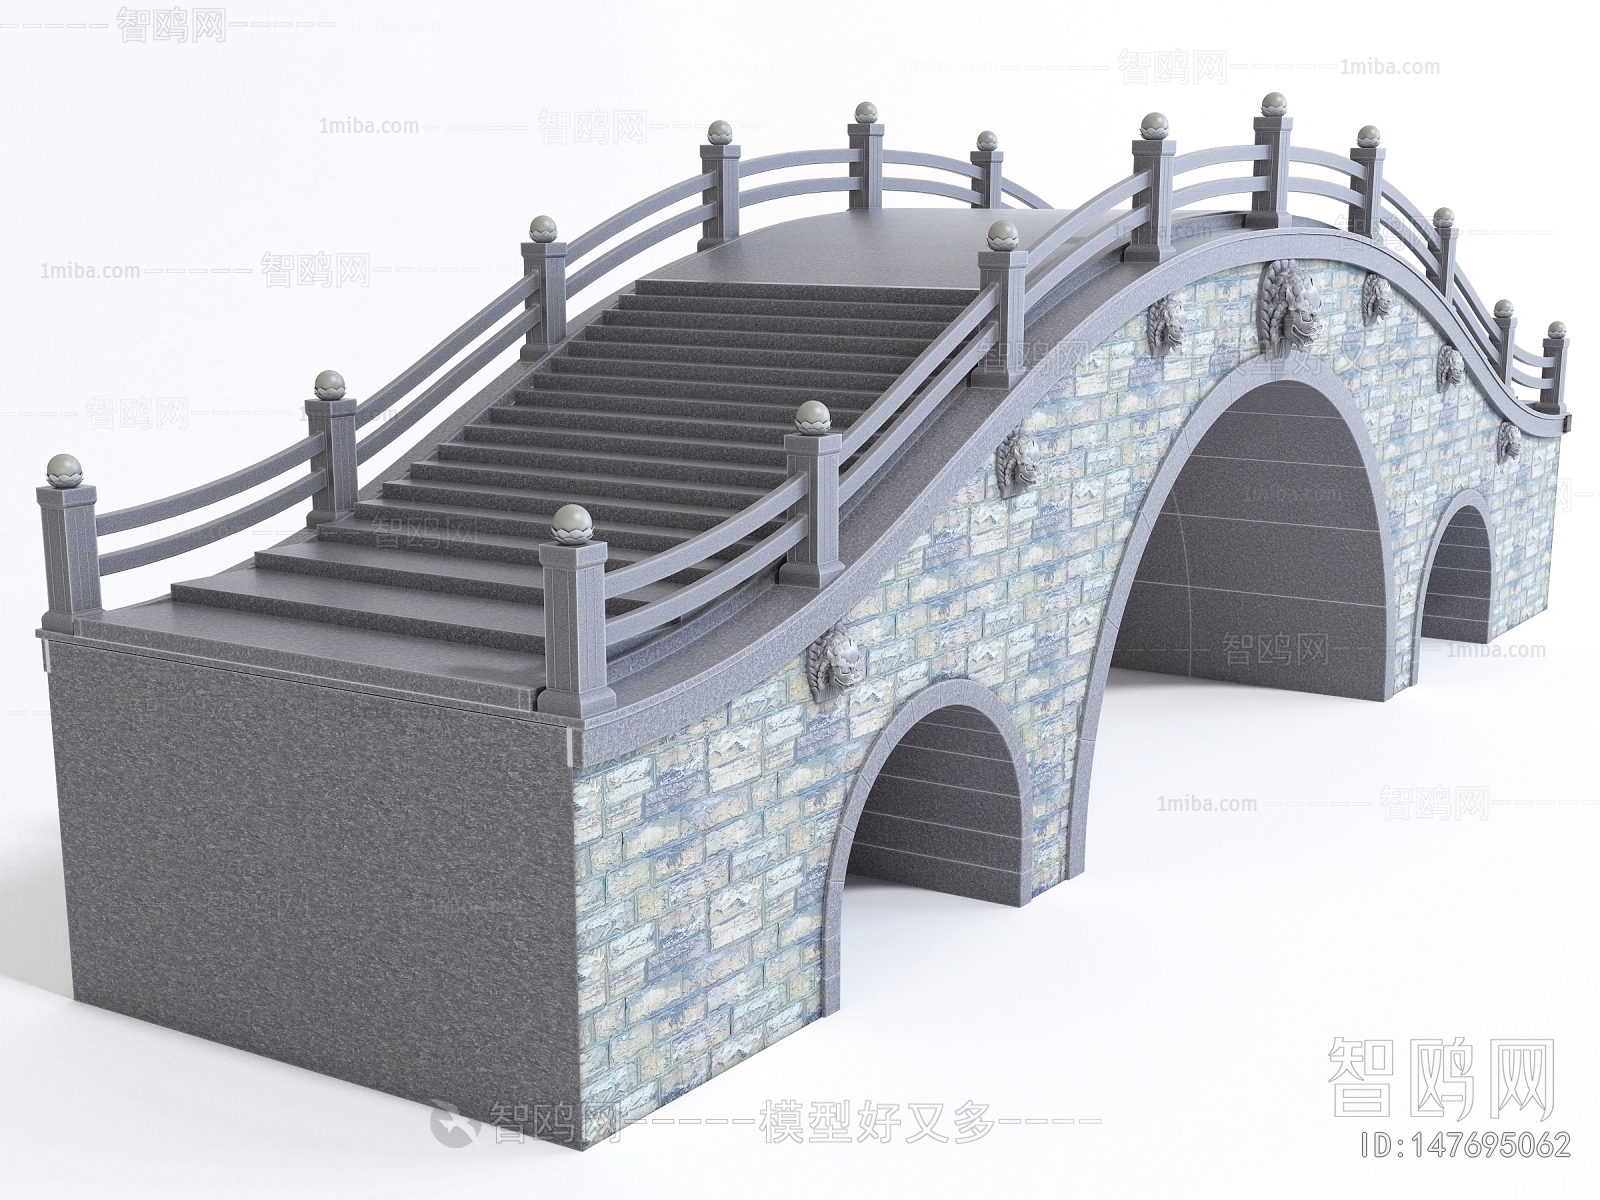 Chinese Style Bridge